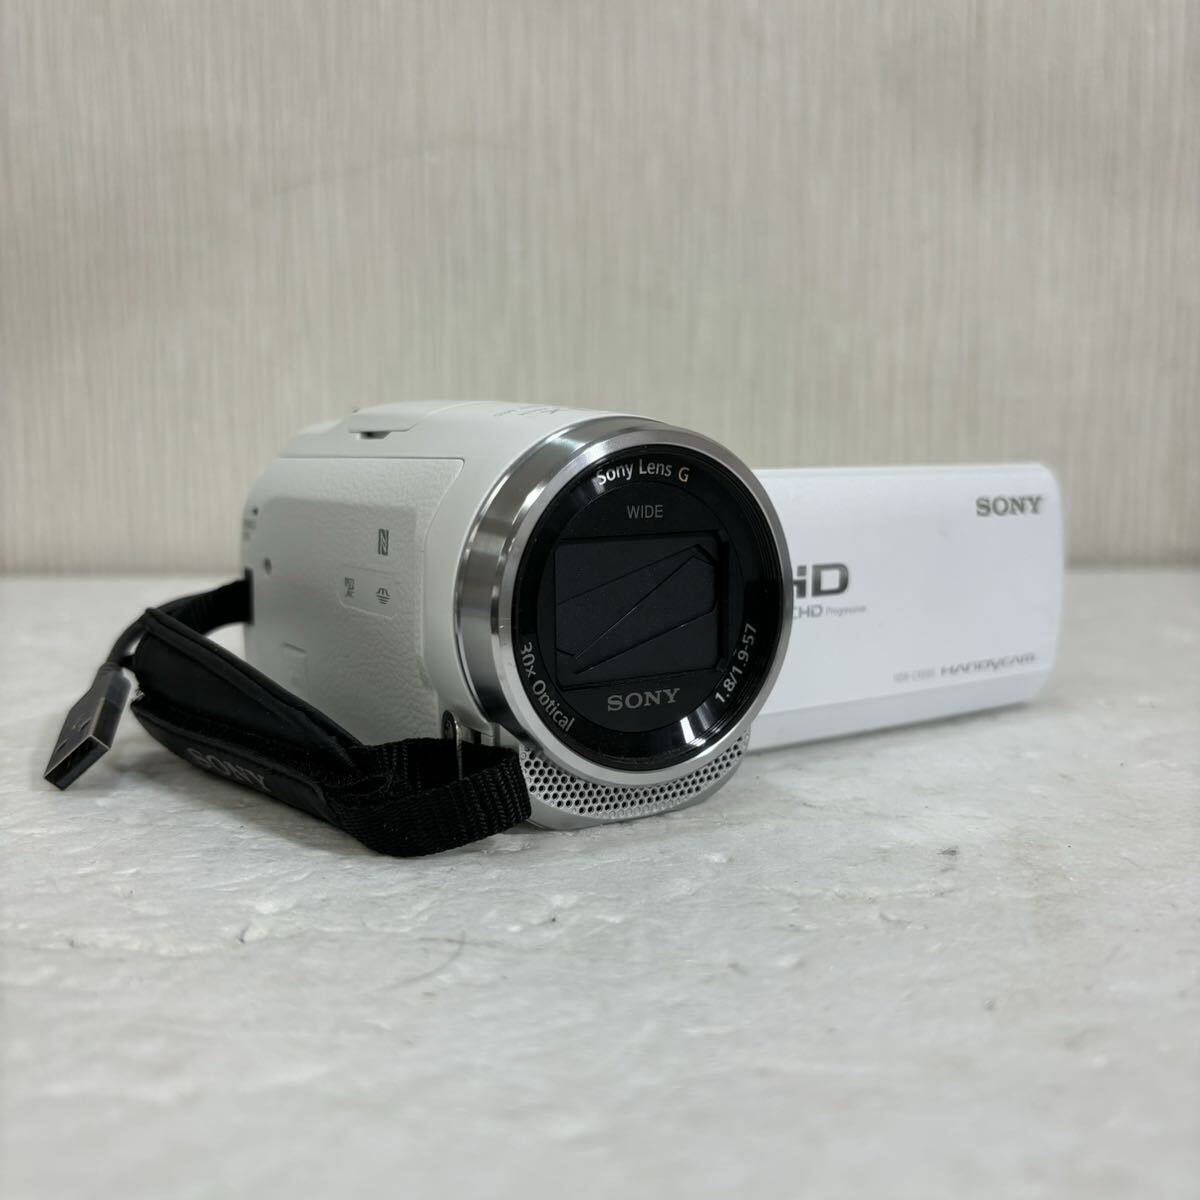 [K2930]1 иен старт!SONY HANDYCAM HDR-CX680 Sony Handycam белый аккумулятор есть цифровая видео камера видео камера 